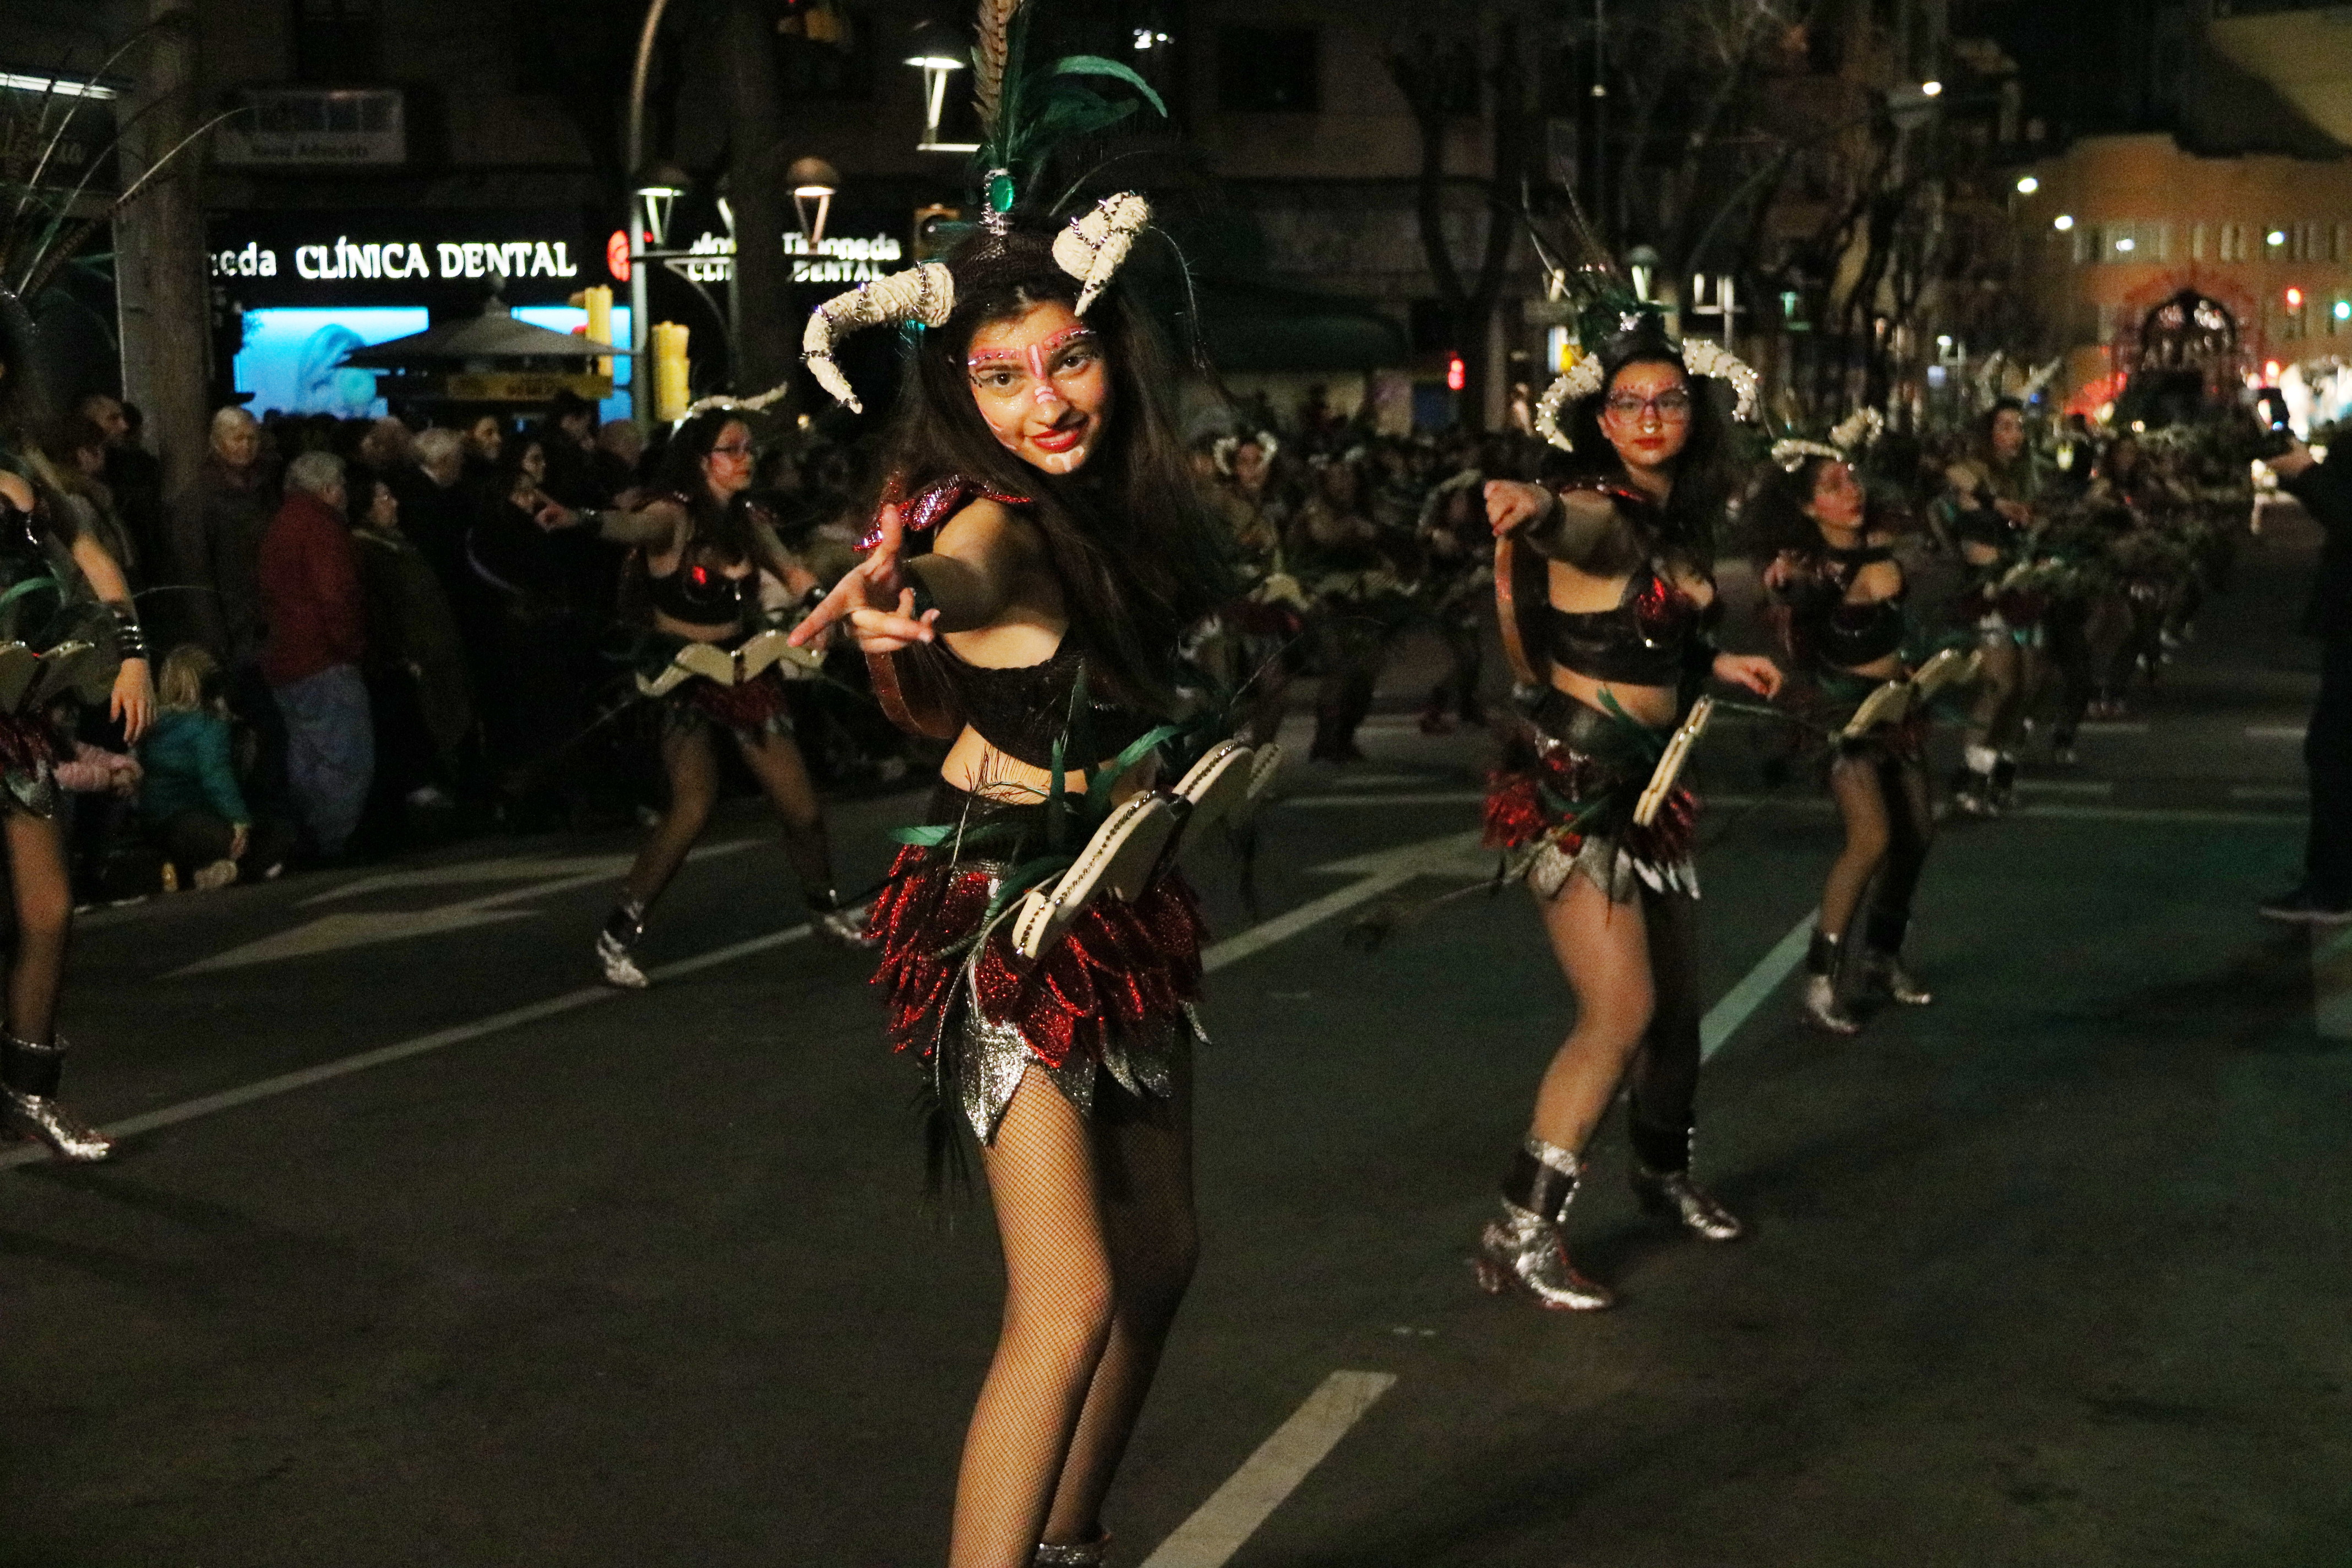 Costumed dancers perform at the Tarragona carnival street parade on February 11 2018 (by Sílvia Jardí)